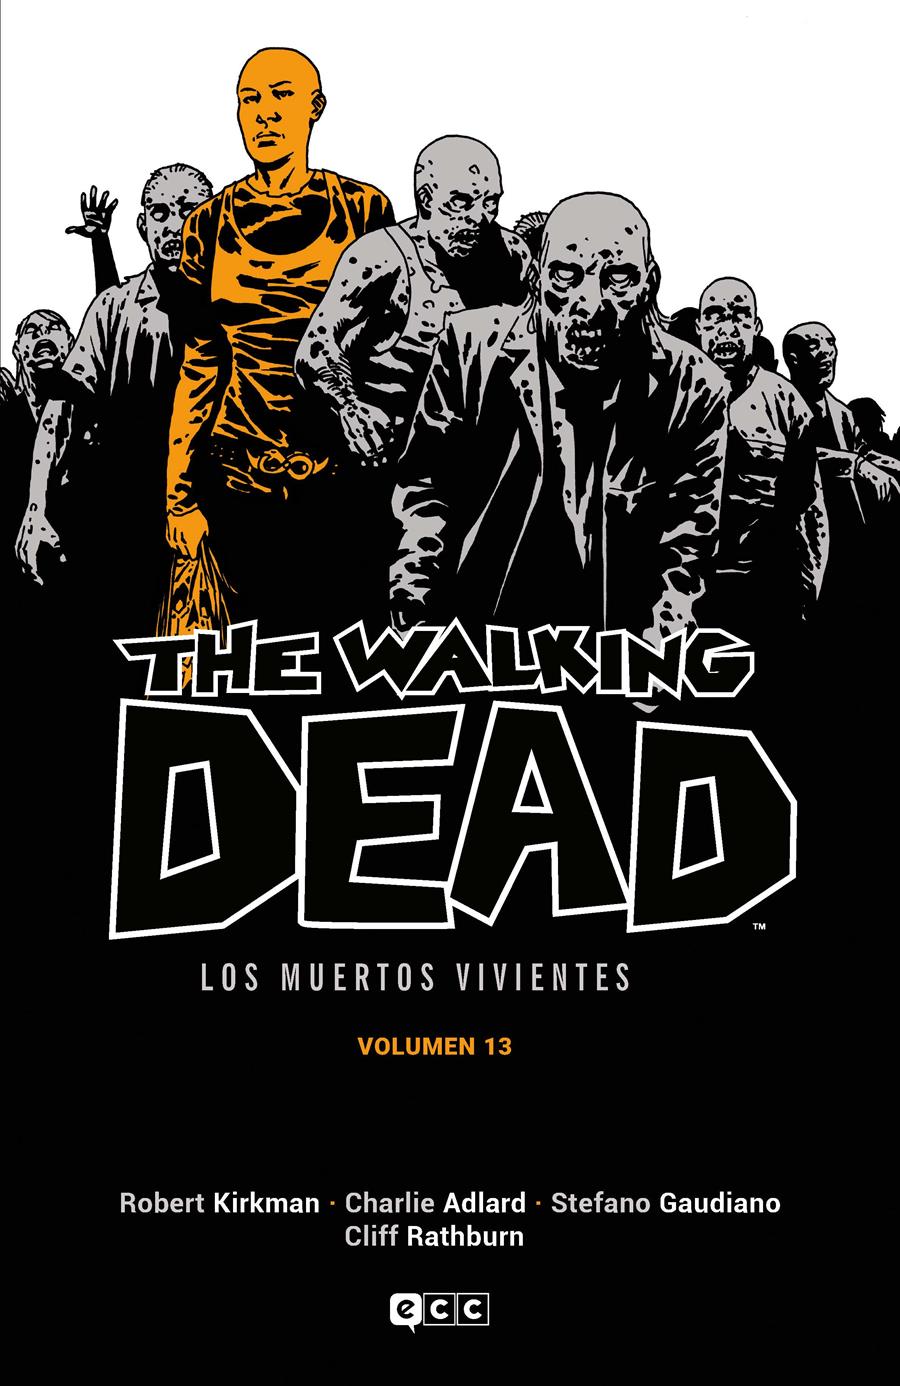 The Walking Dead (Los muertos vivientes) vol. 13 de 16 | N0123-ECC40 | Charlie Adlard / Robert Kirkman | Terra de Còmic - Tu tienda de cómics online especializada en cómics, manga y merchandising